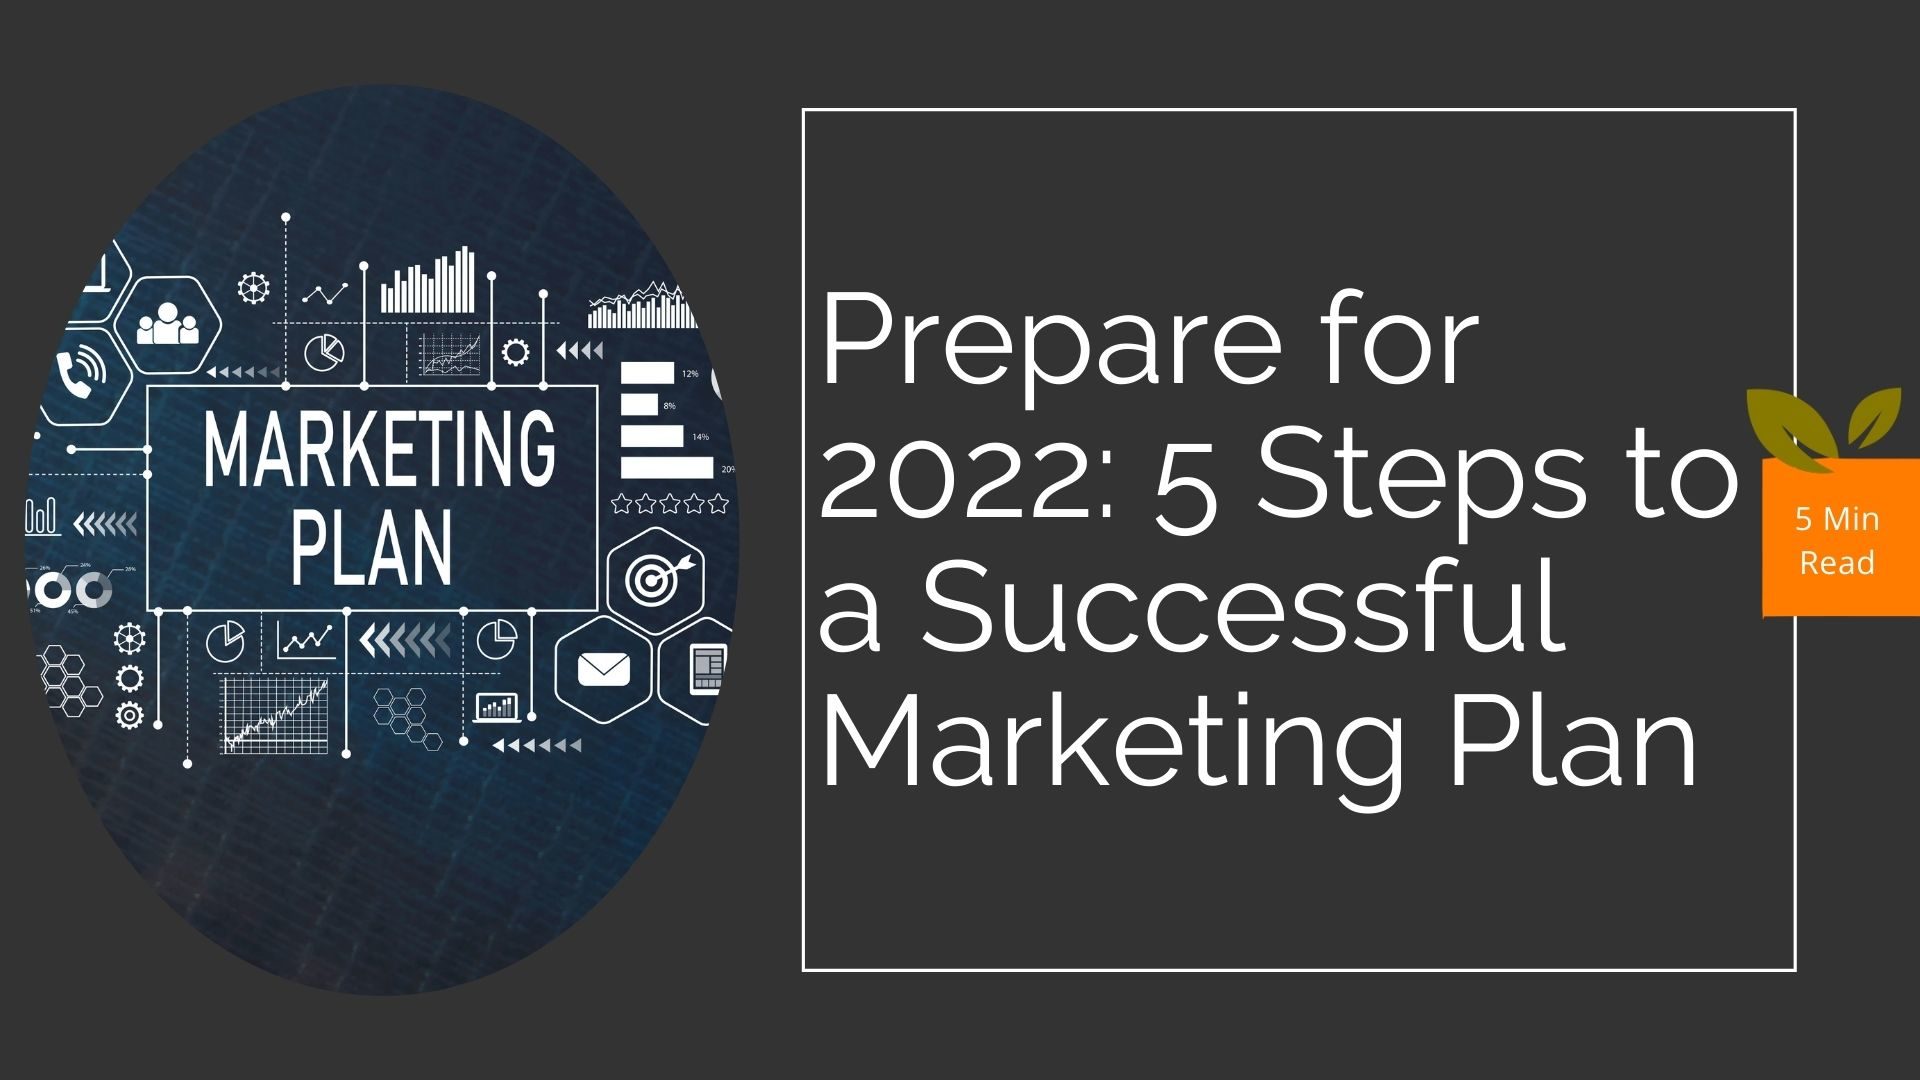 Marketing Plan for 2022